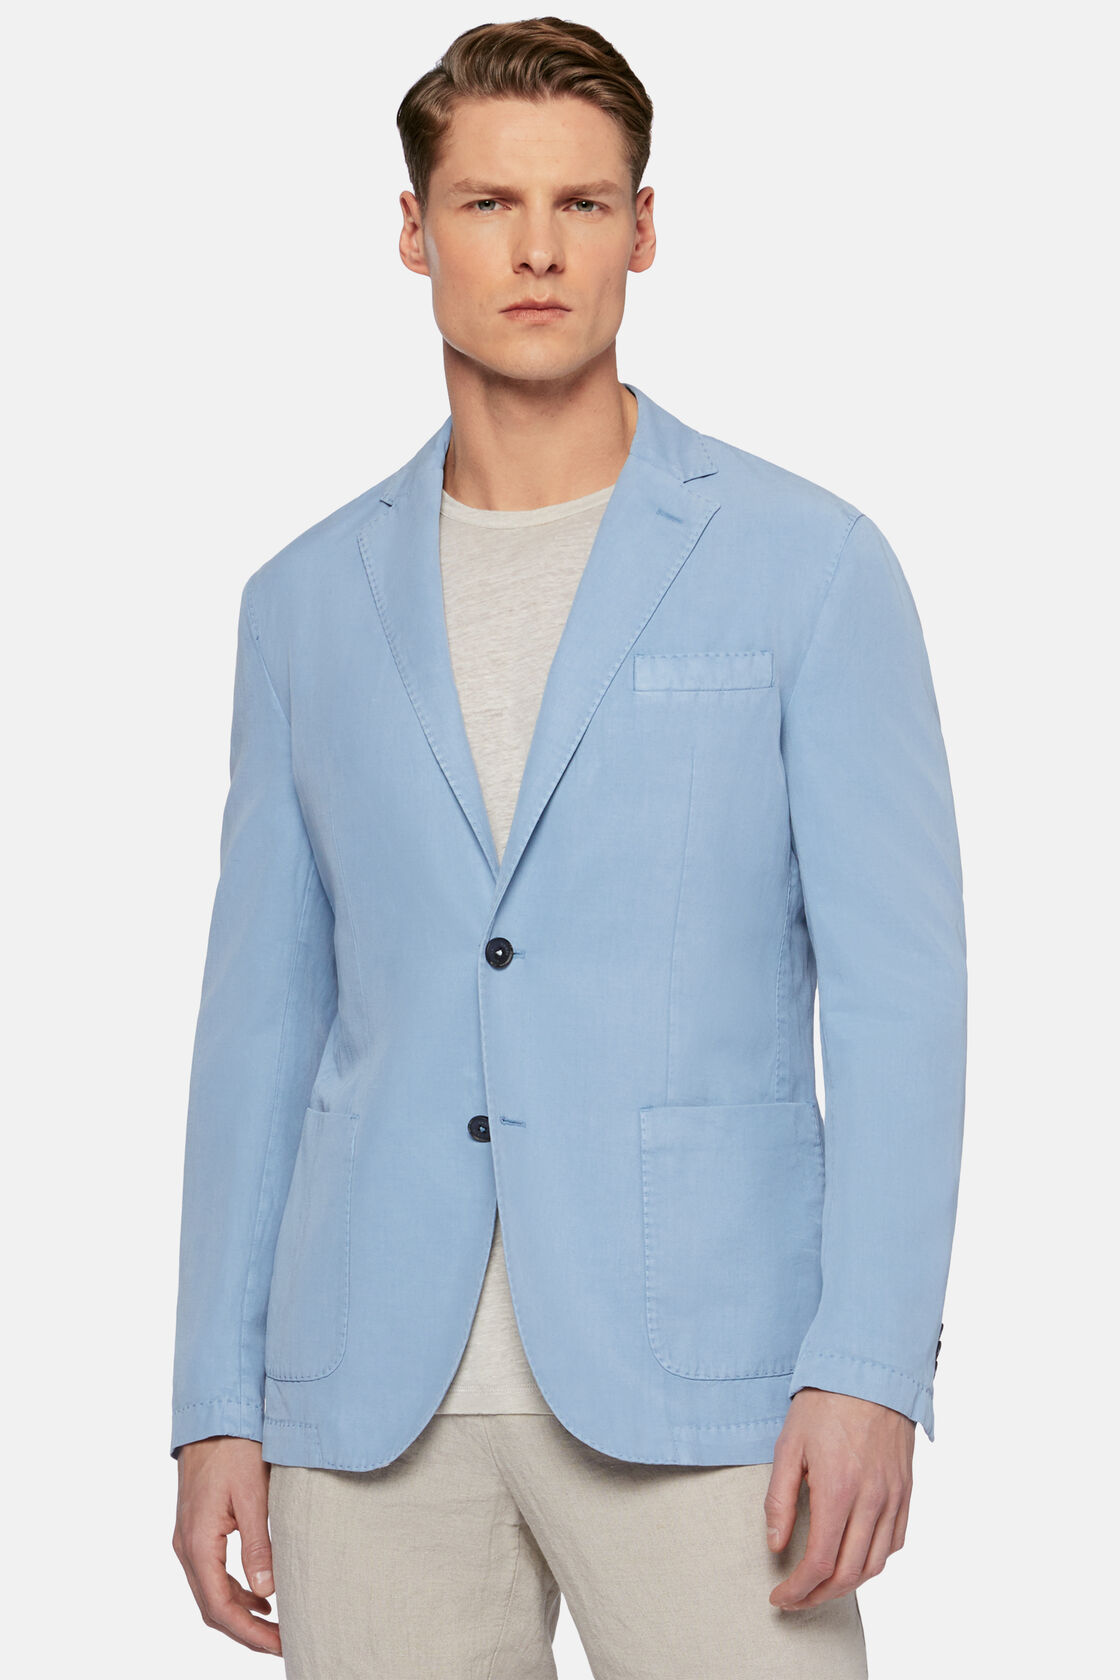 Sky Blue Jacket In Tencel/Linen/Cotton, Light Blue, hi-res